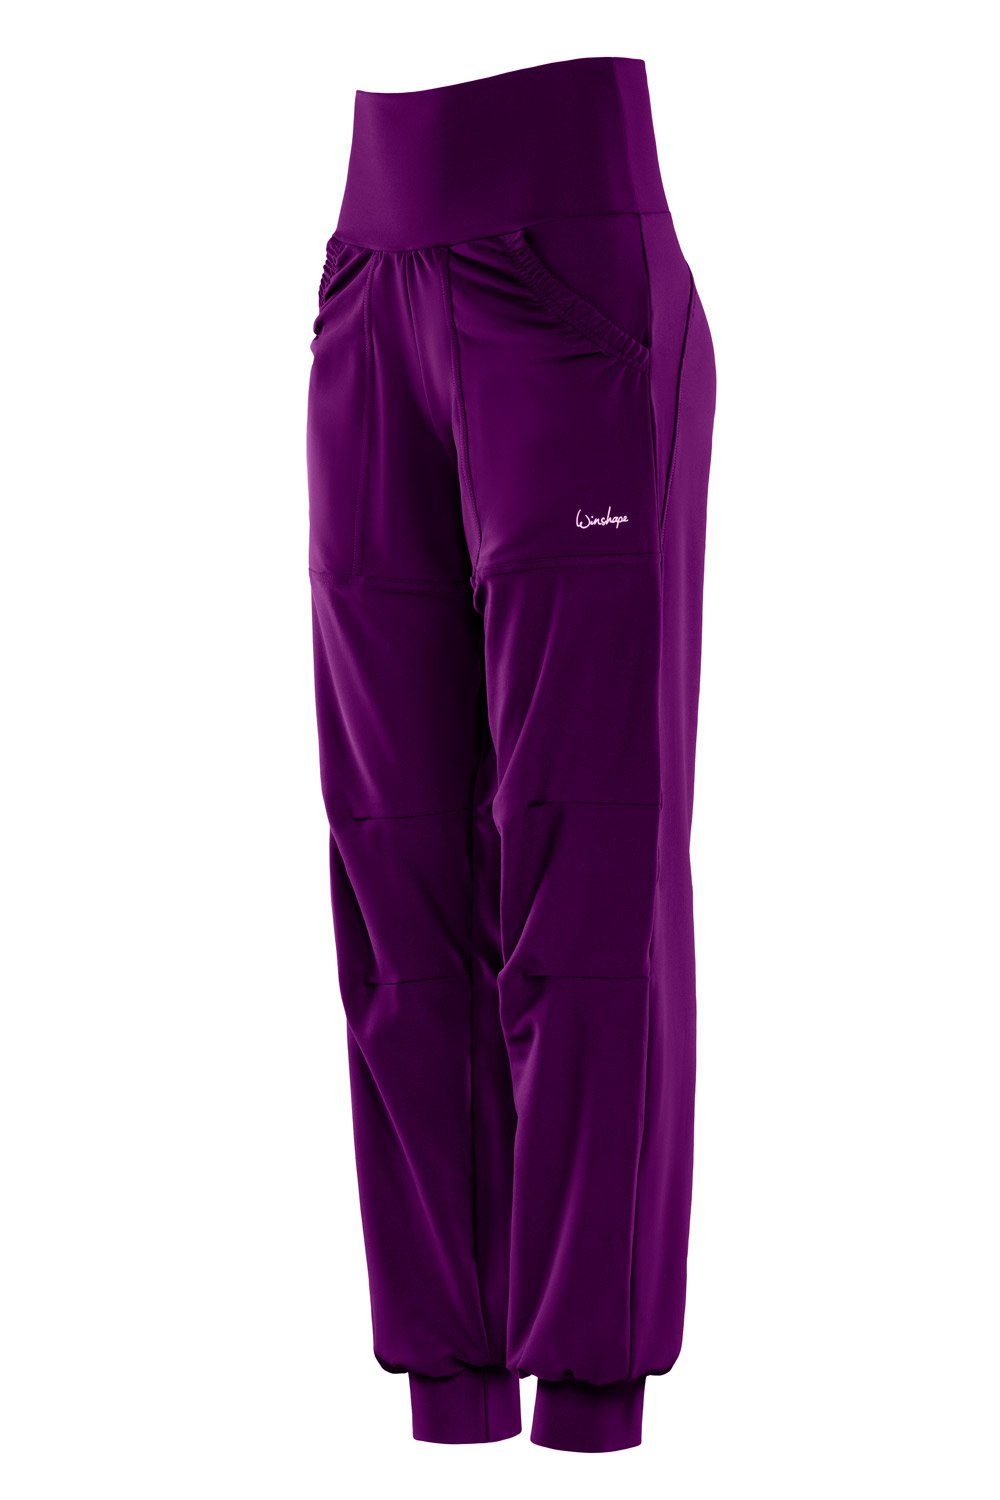 Winshape Sporthose Functional Leisure High Waist dark plum Comfort LEI101C Time Trousers